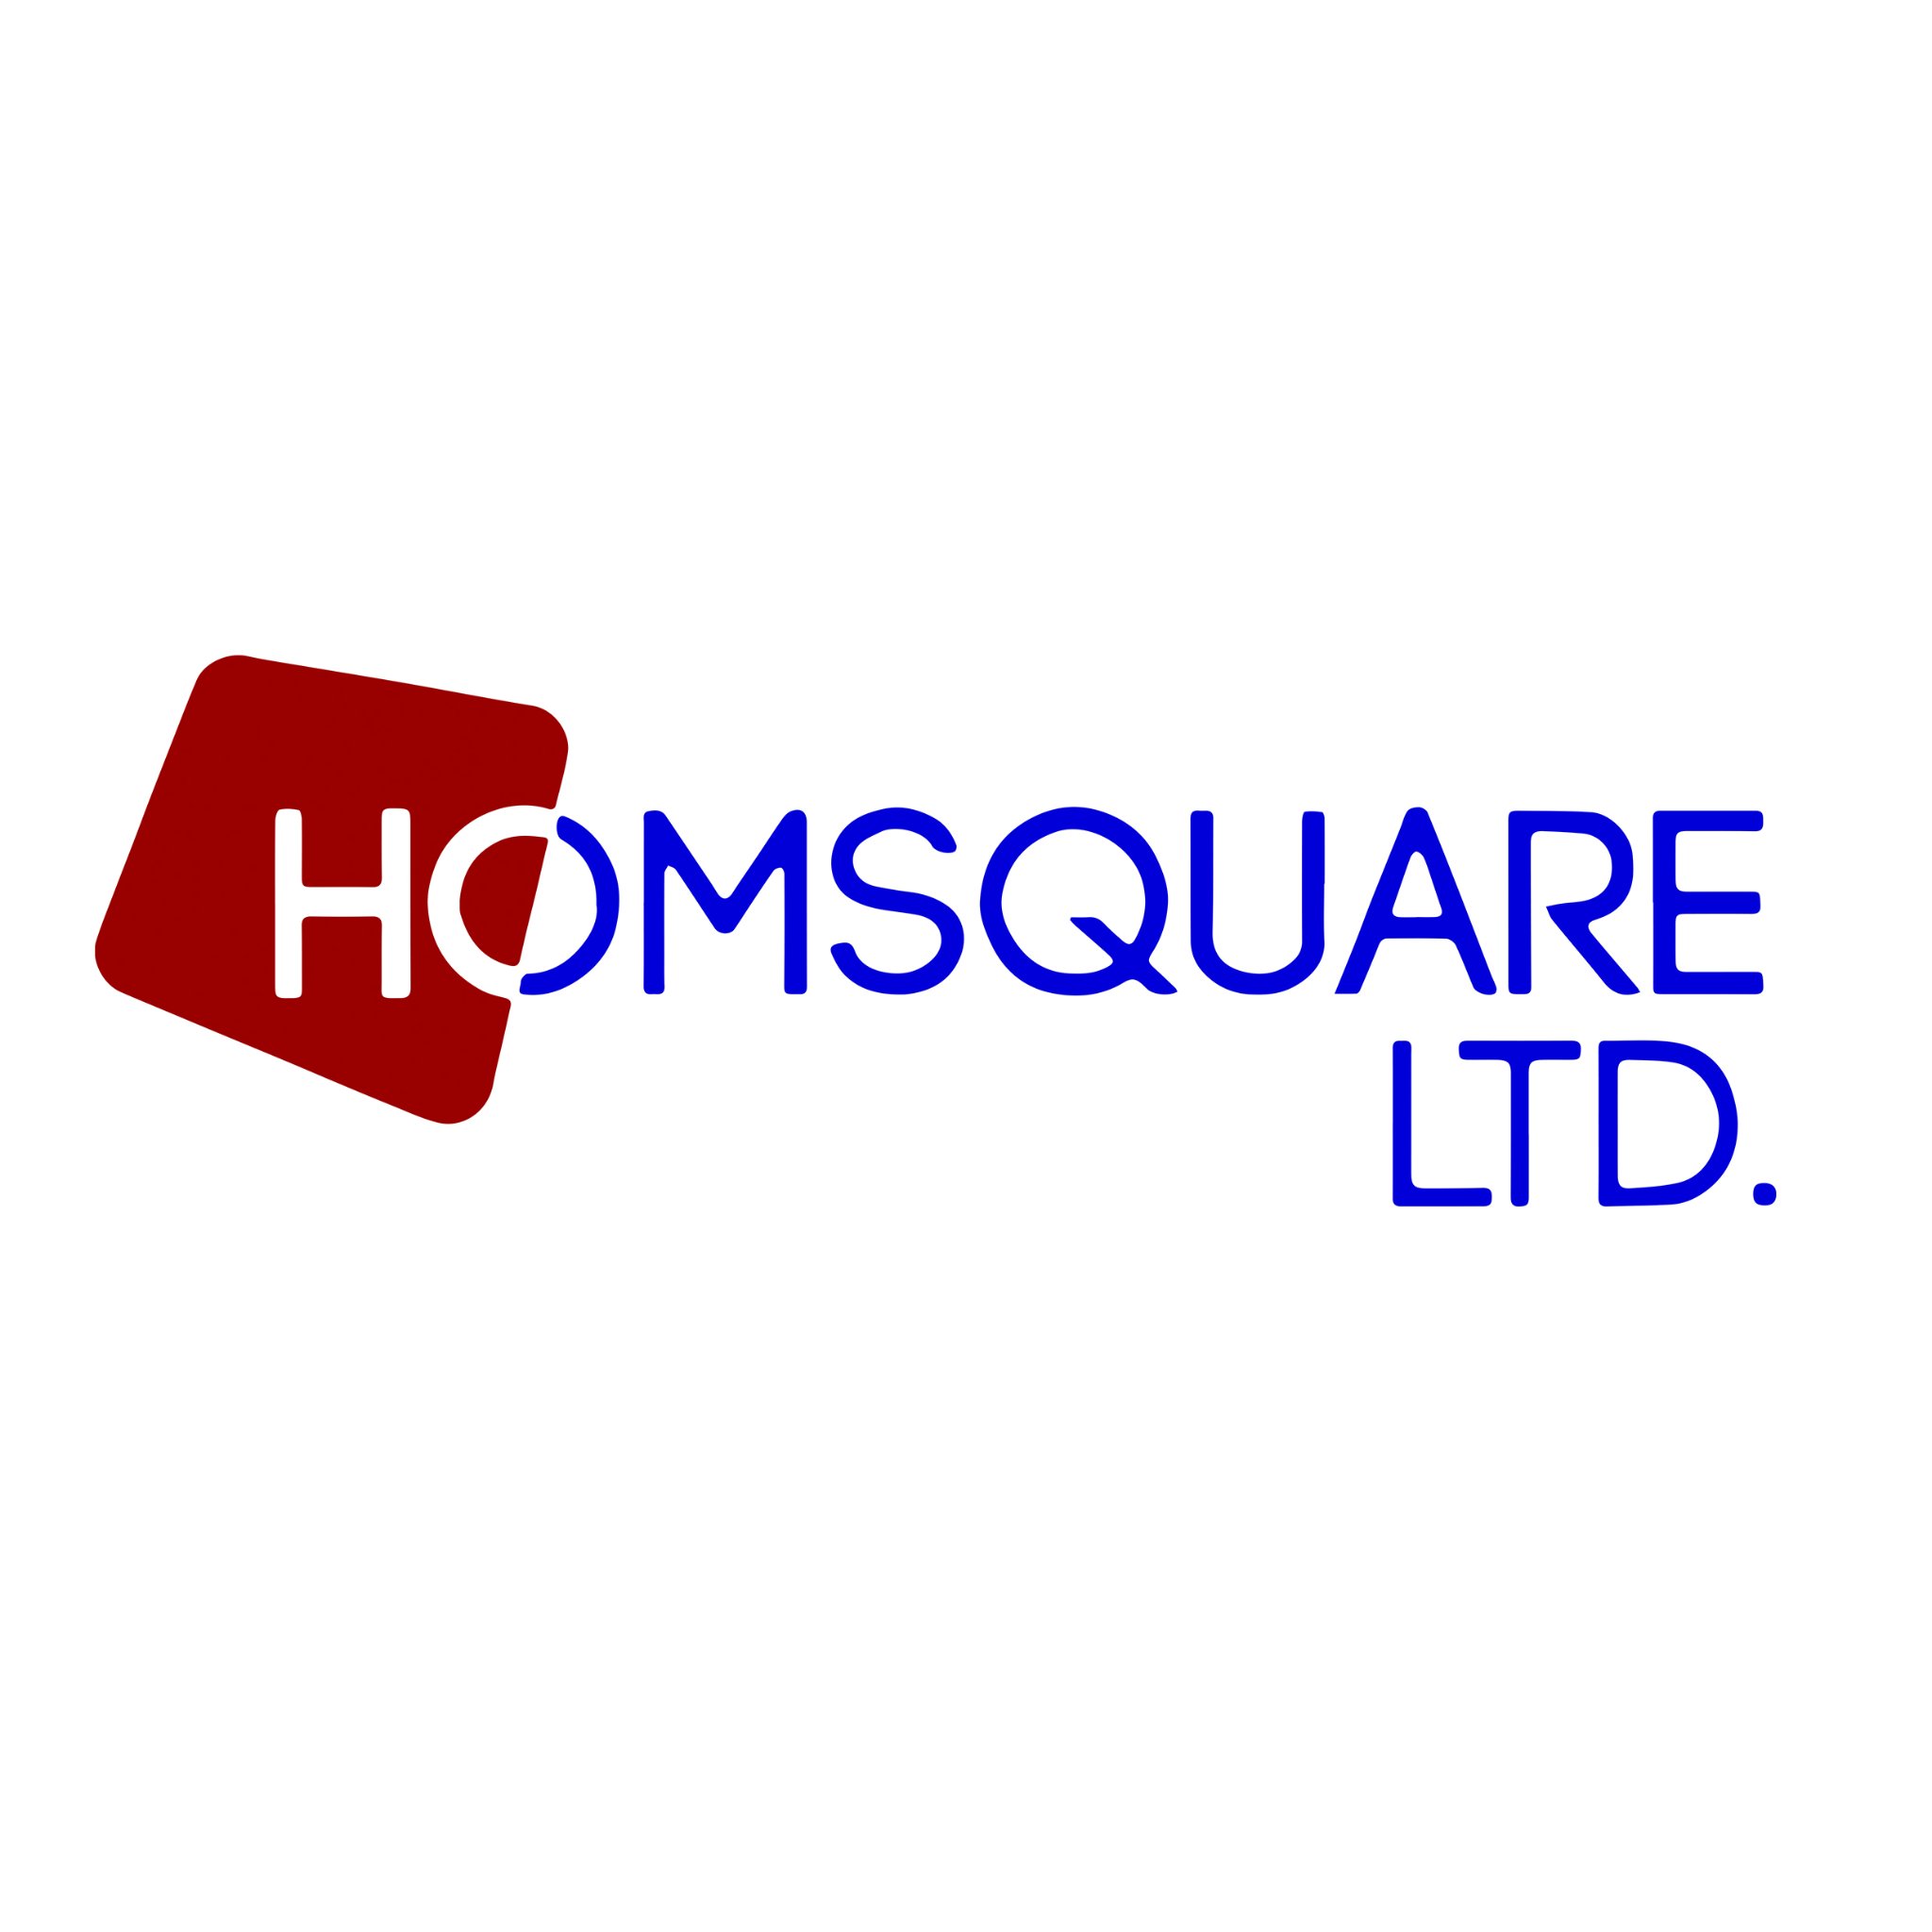 Homsquare Ltd